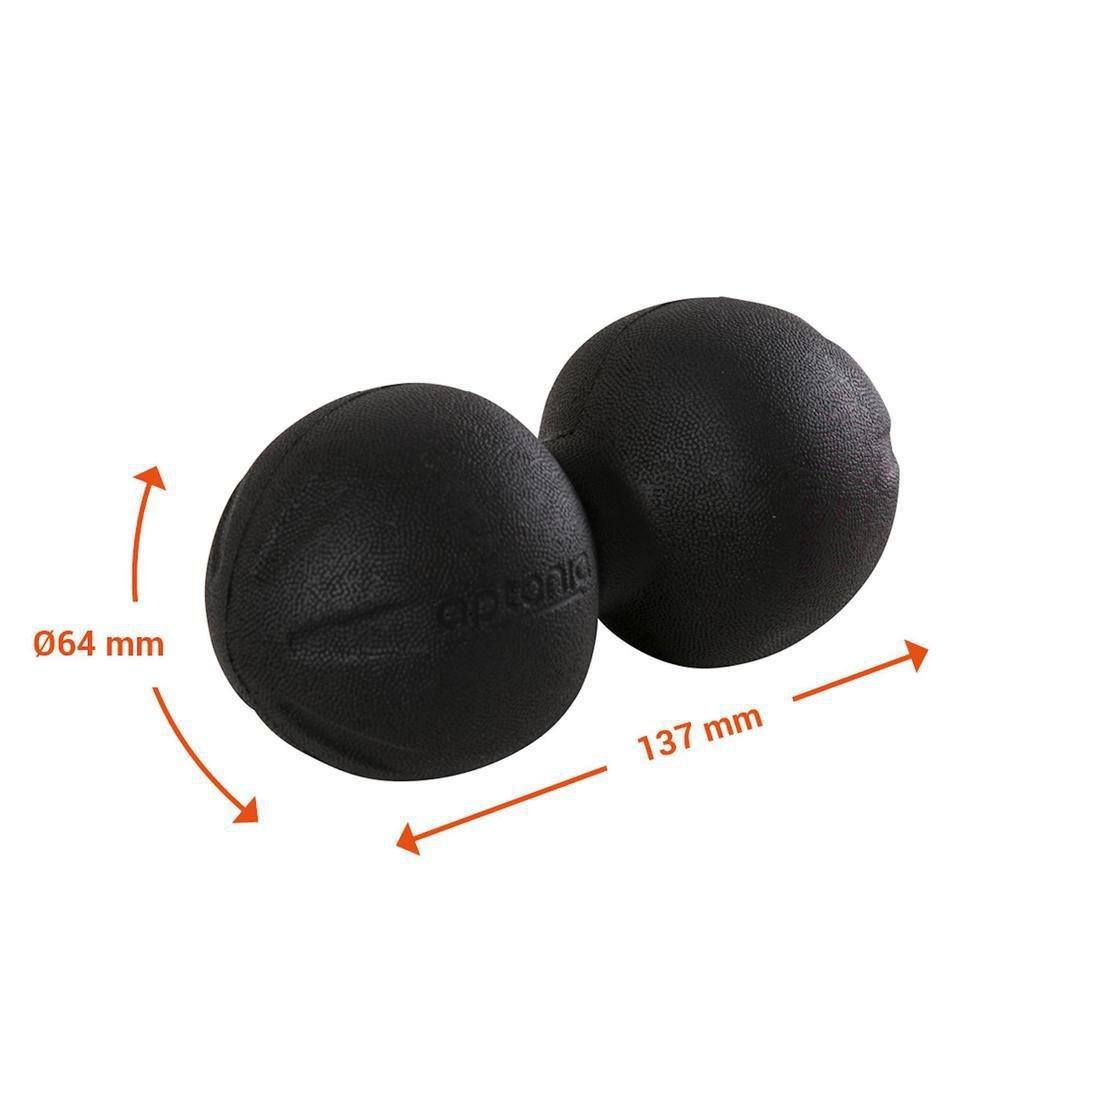 DECATHLON - Massage Ball - 500 Double Peanut Shape, Black